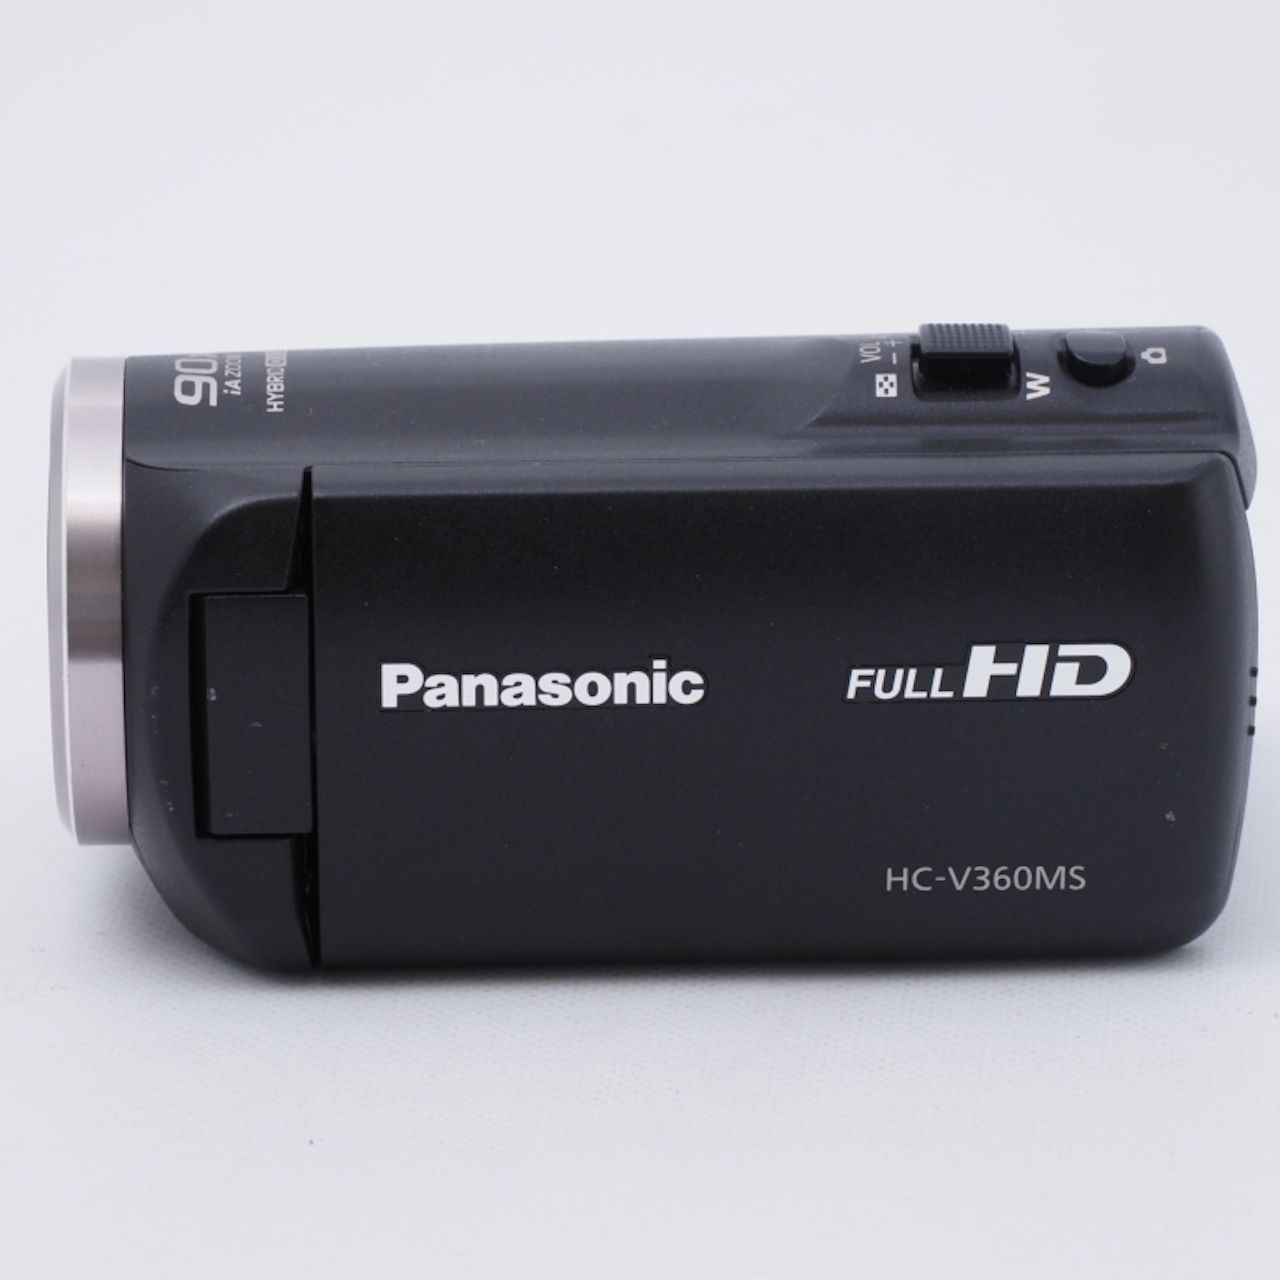 Panasonic HDビデオカメラ HC-V360MS 16GB 倍率90倍 - メルカリ